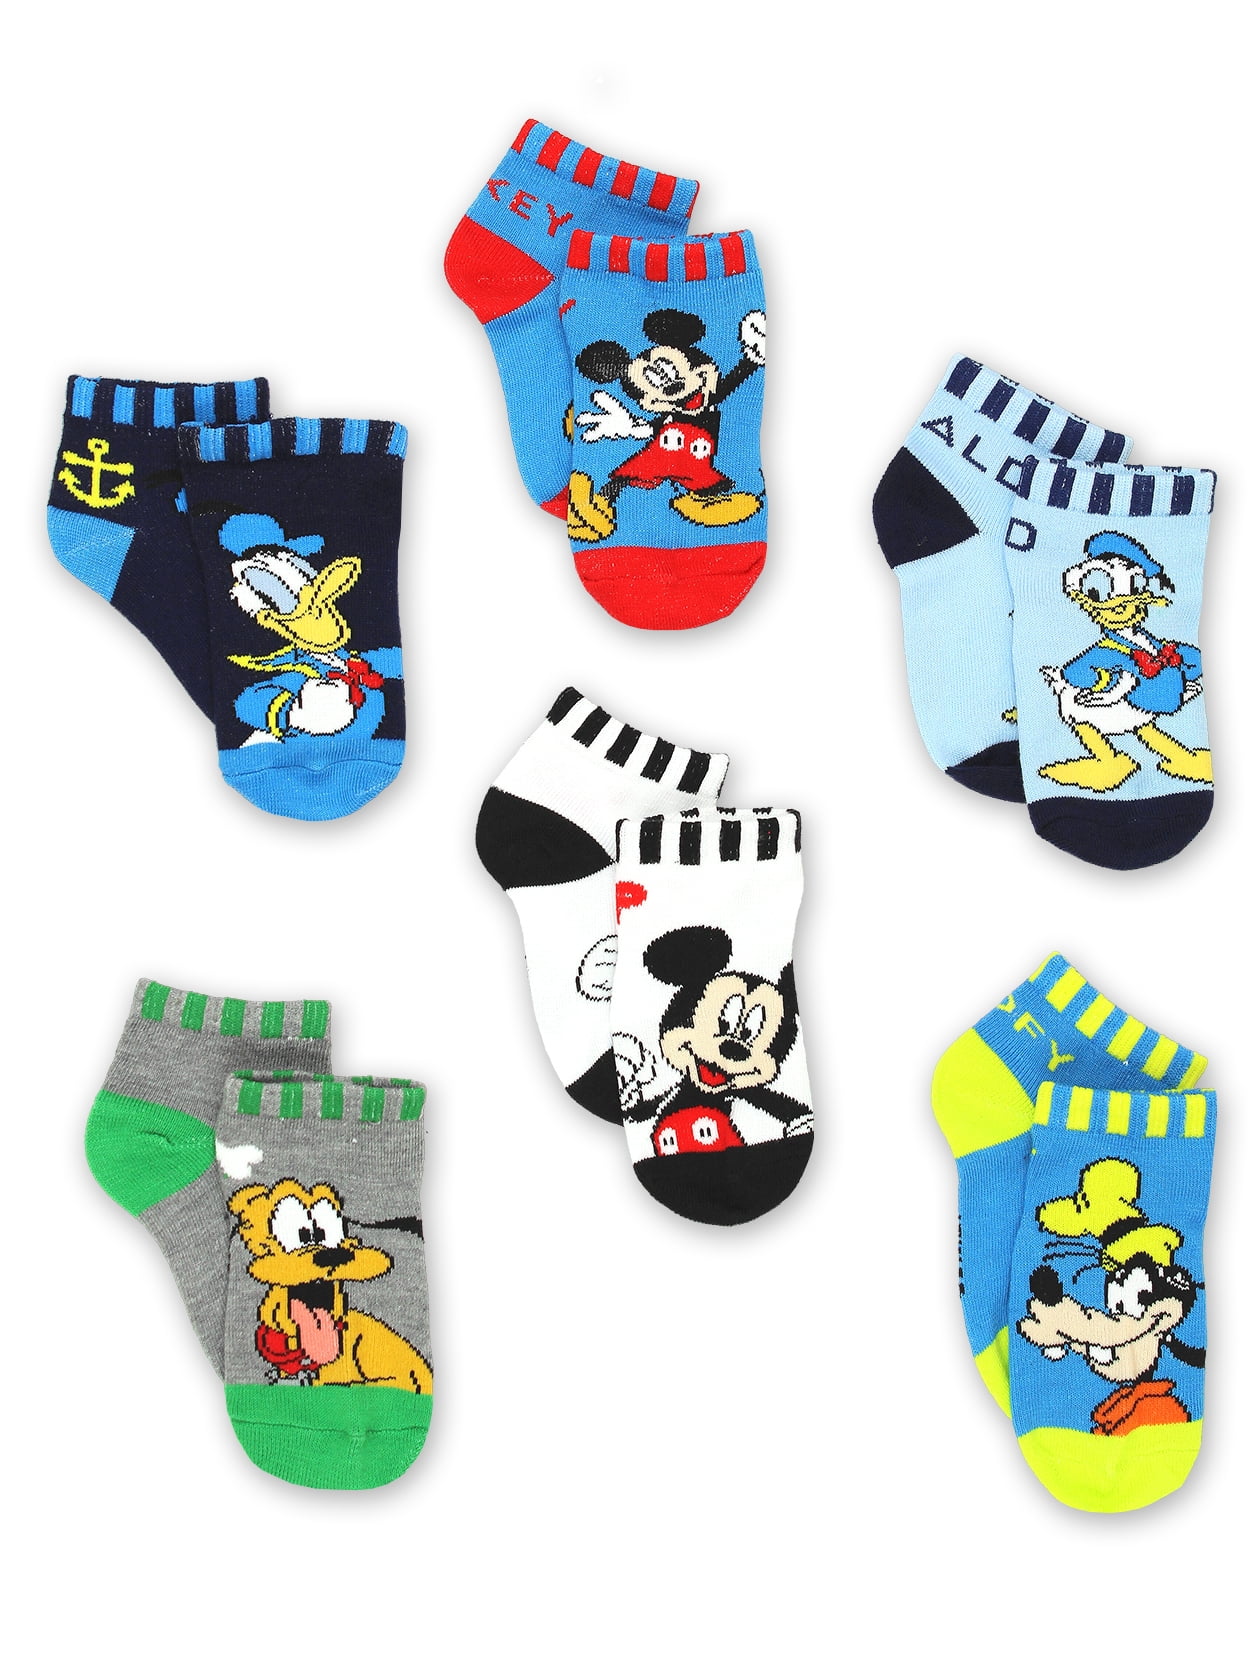 6mo-4T Boys Fuzzy Socks 3-Pairs Sizes Elmo Paw Patrol Mickey TMNT Spongebob NWT